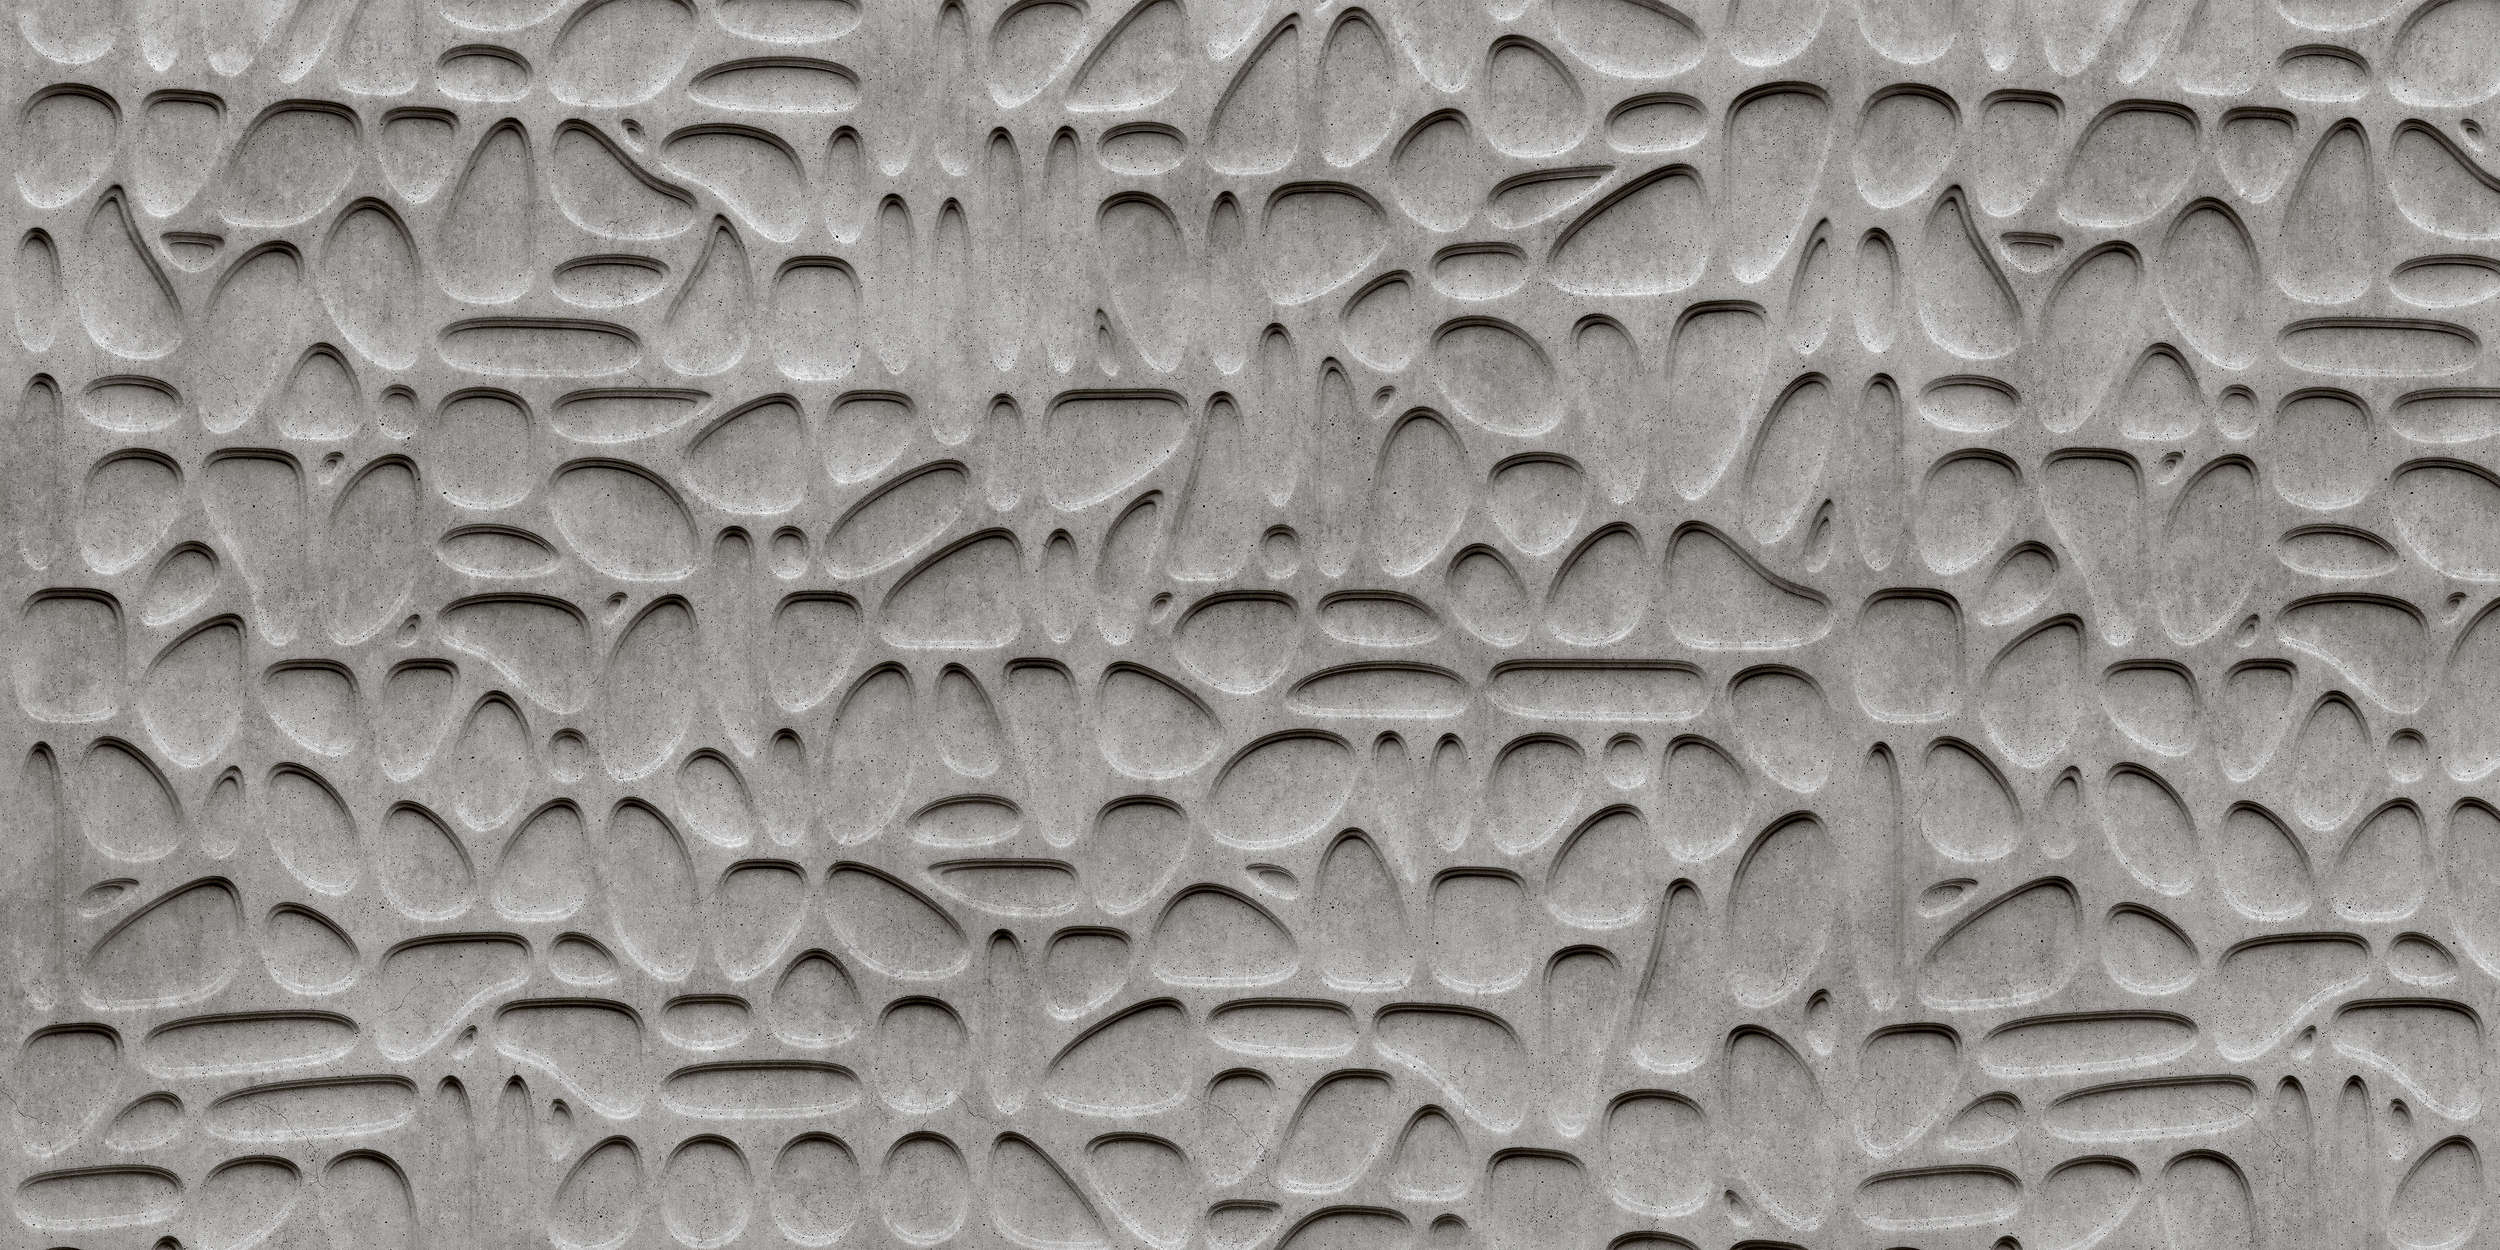             Maze 1 - Coole 3D Beton-Luftblasen Fototapete – Grau, Schwarz | Premium Glattvlies
        